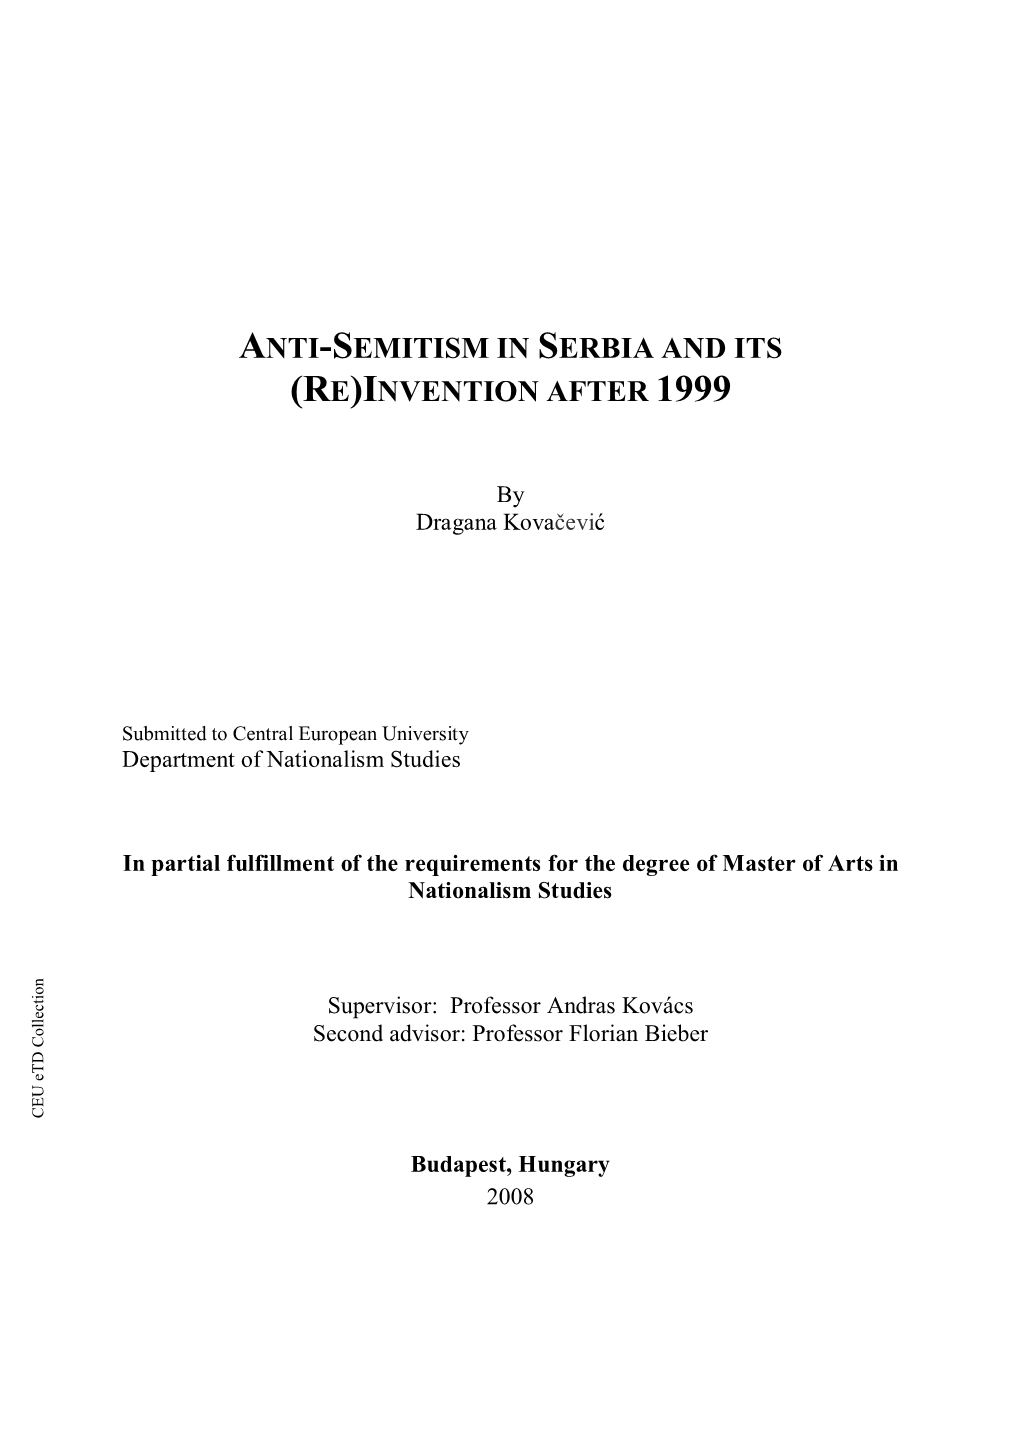 Anti-Semitism in Serbia and Former Yugoslavia